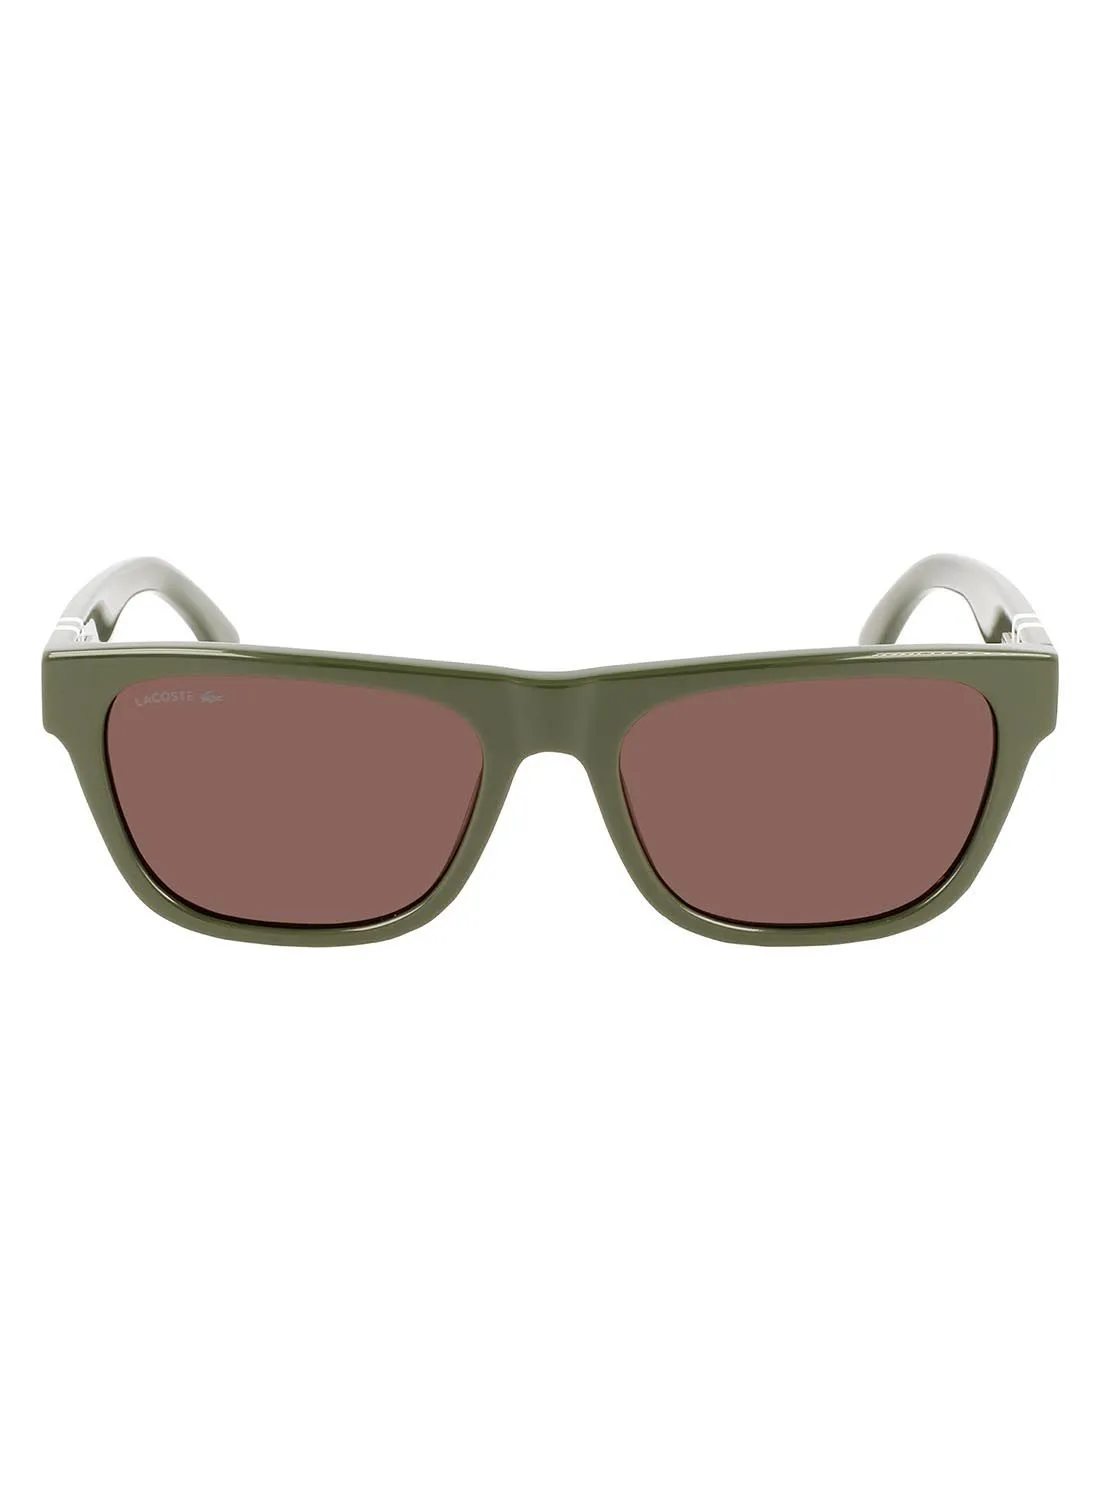 LACOSTE UV Rays Protection Eyewear Sunglasses L979S-275-5618